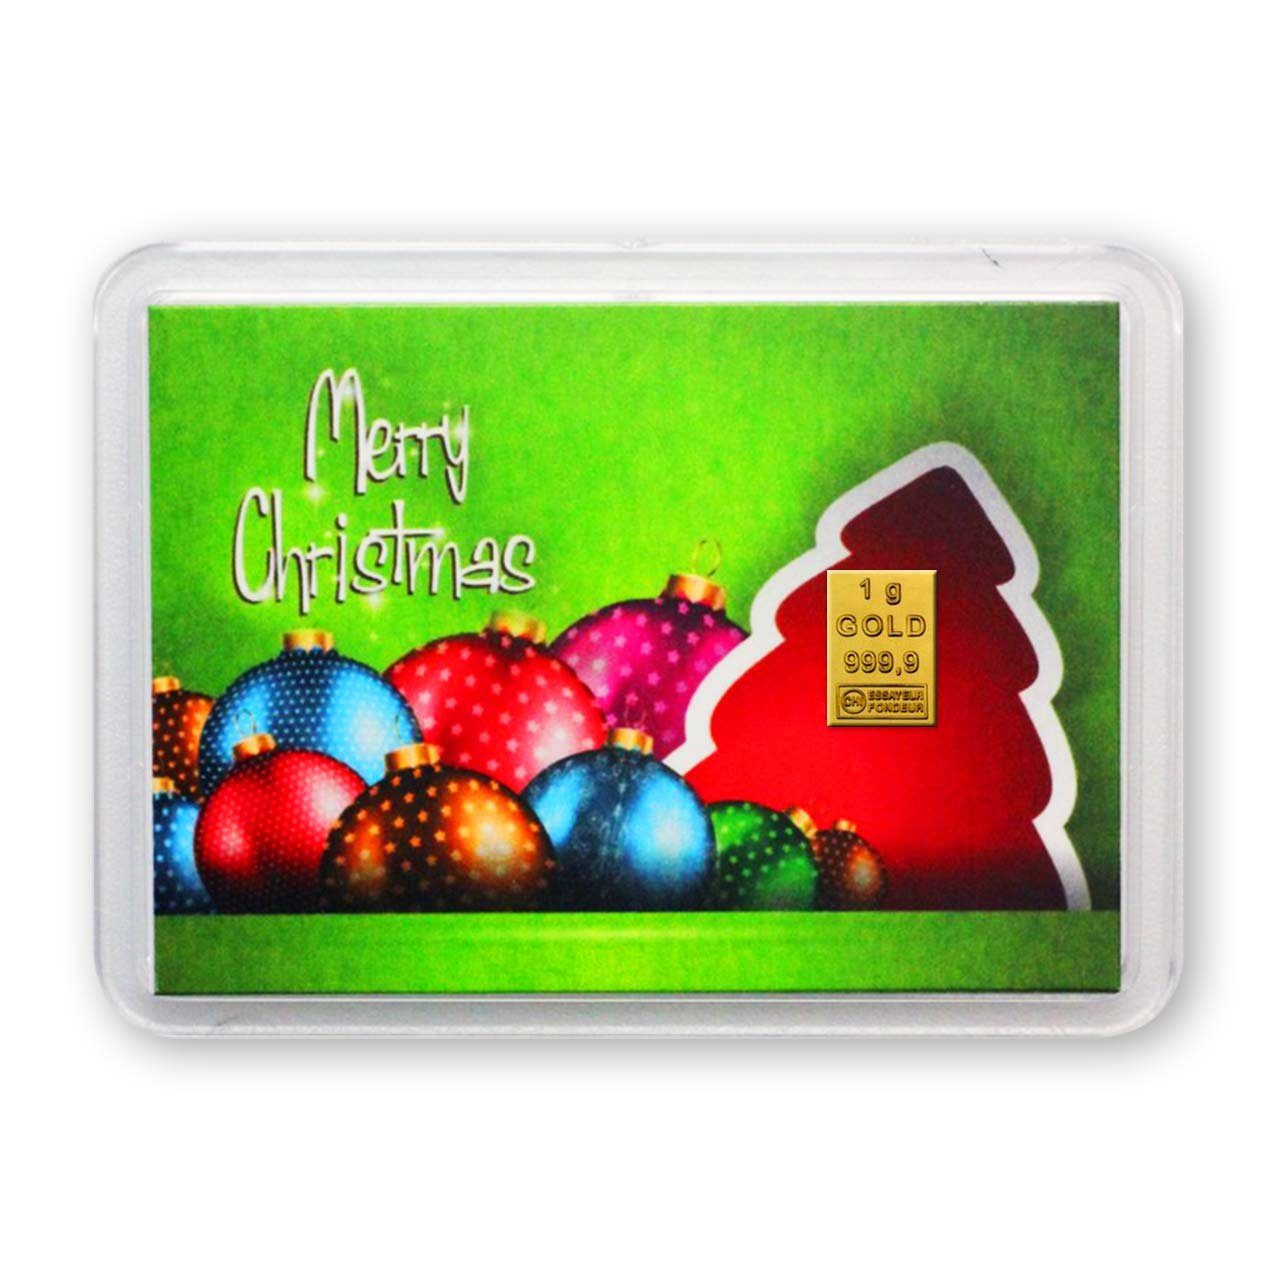 Goldschulz Grußkarten 1 Gramm Gold Motivbox / Grußkarte Merry Christmas Kugeln